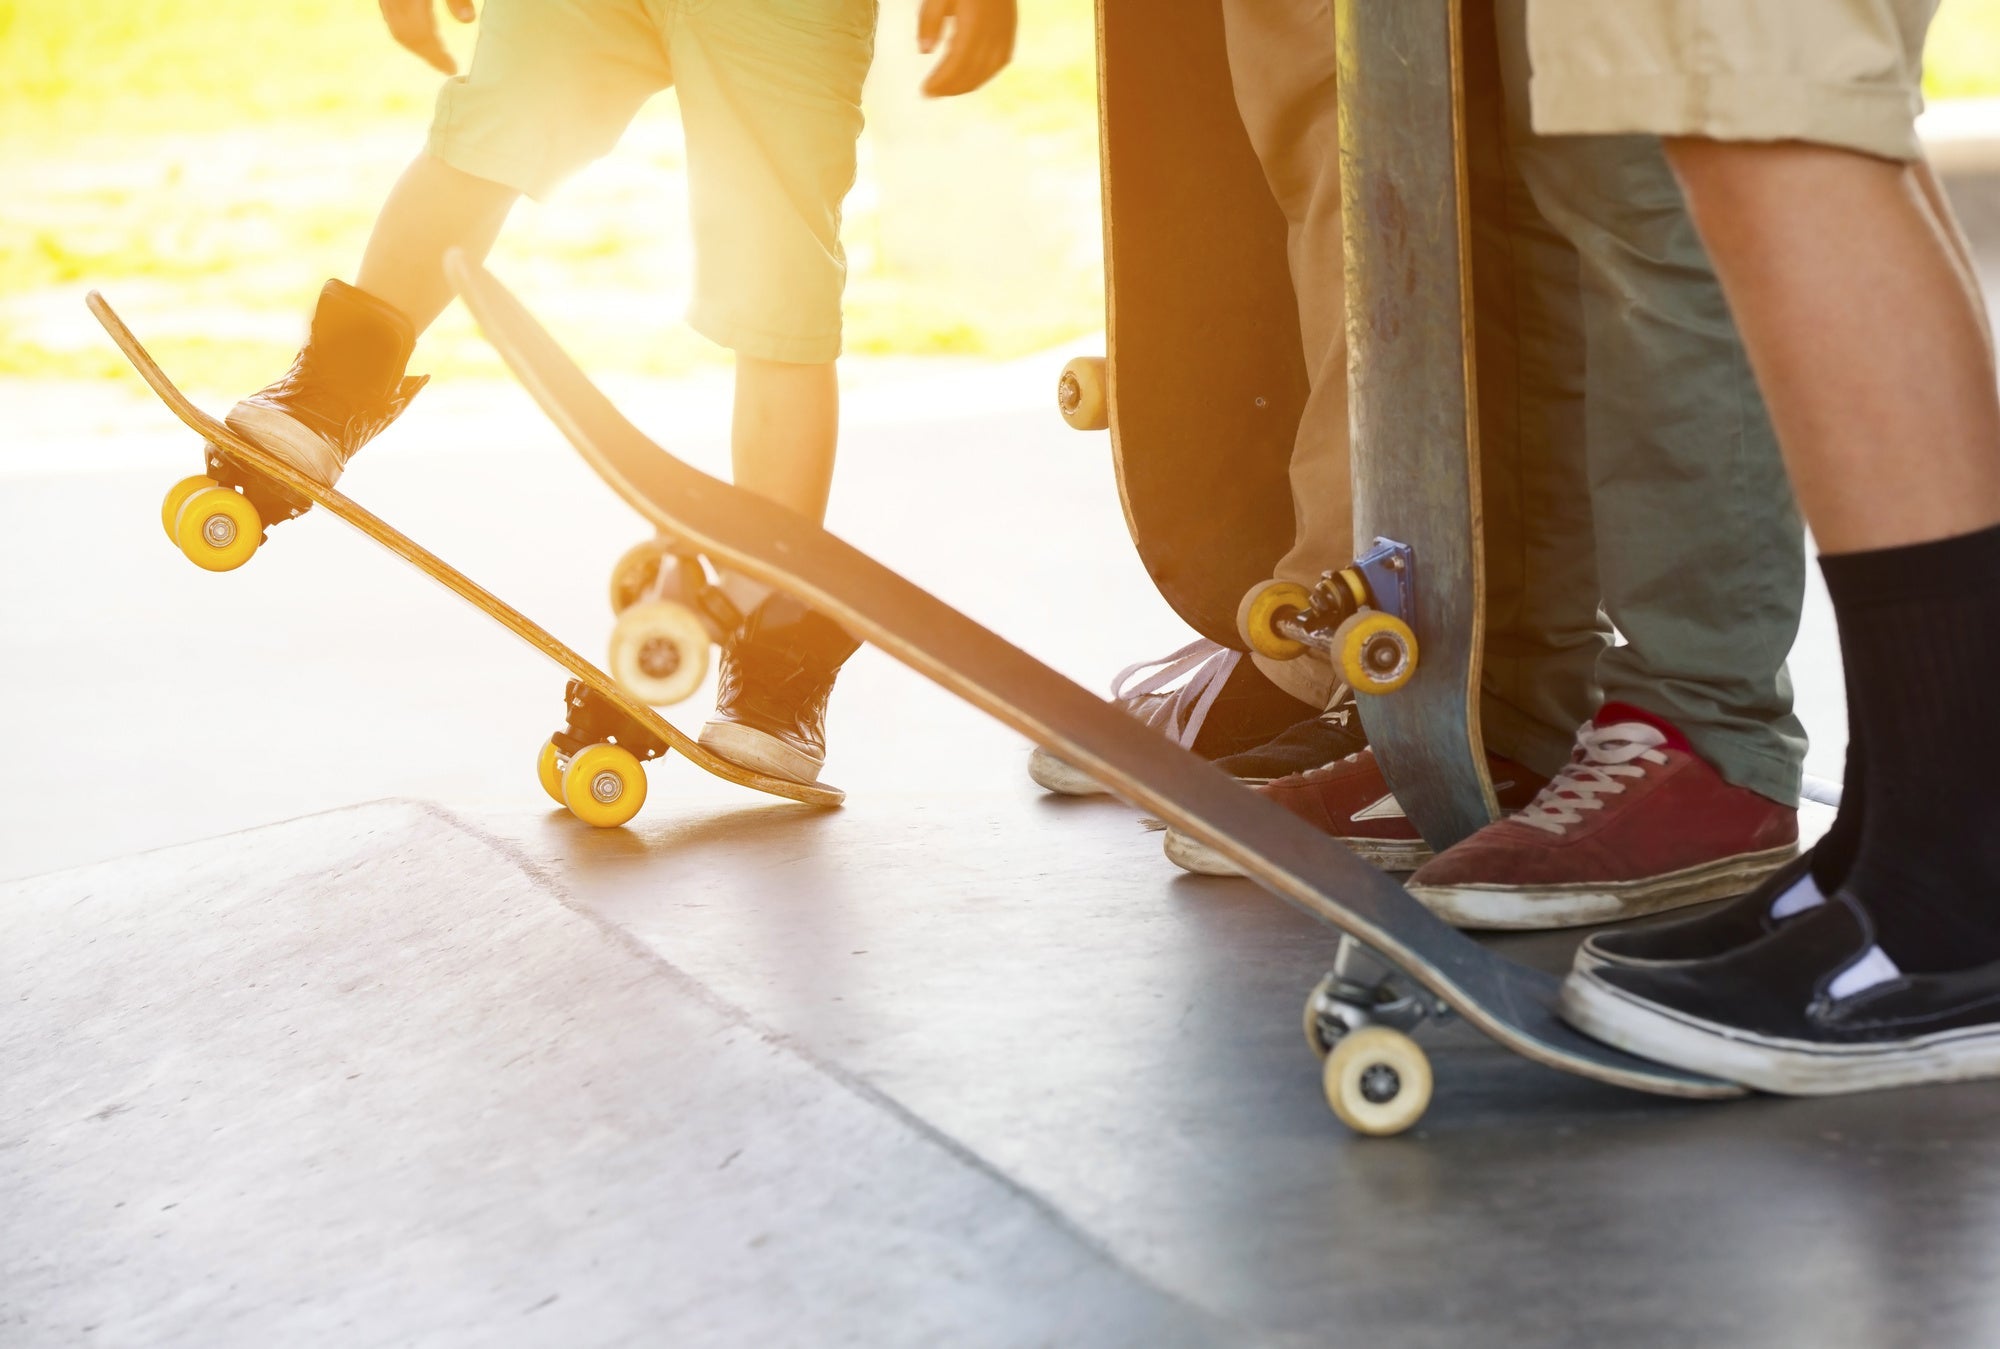 skateboarding culture